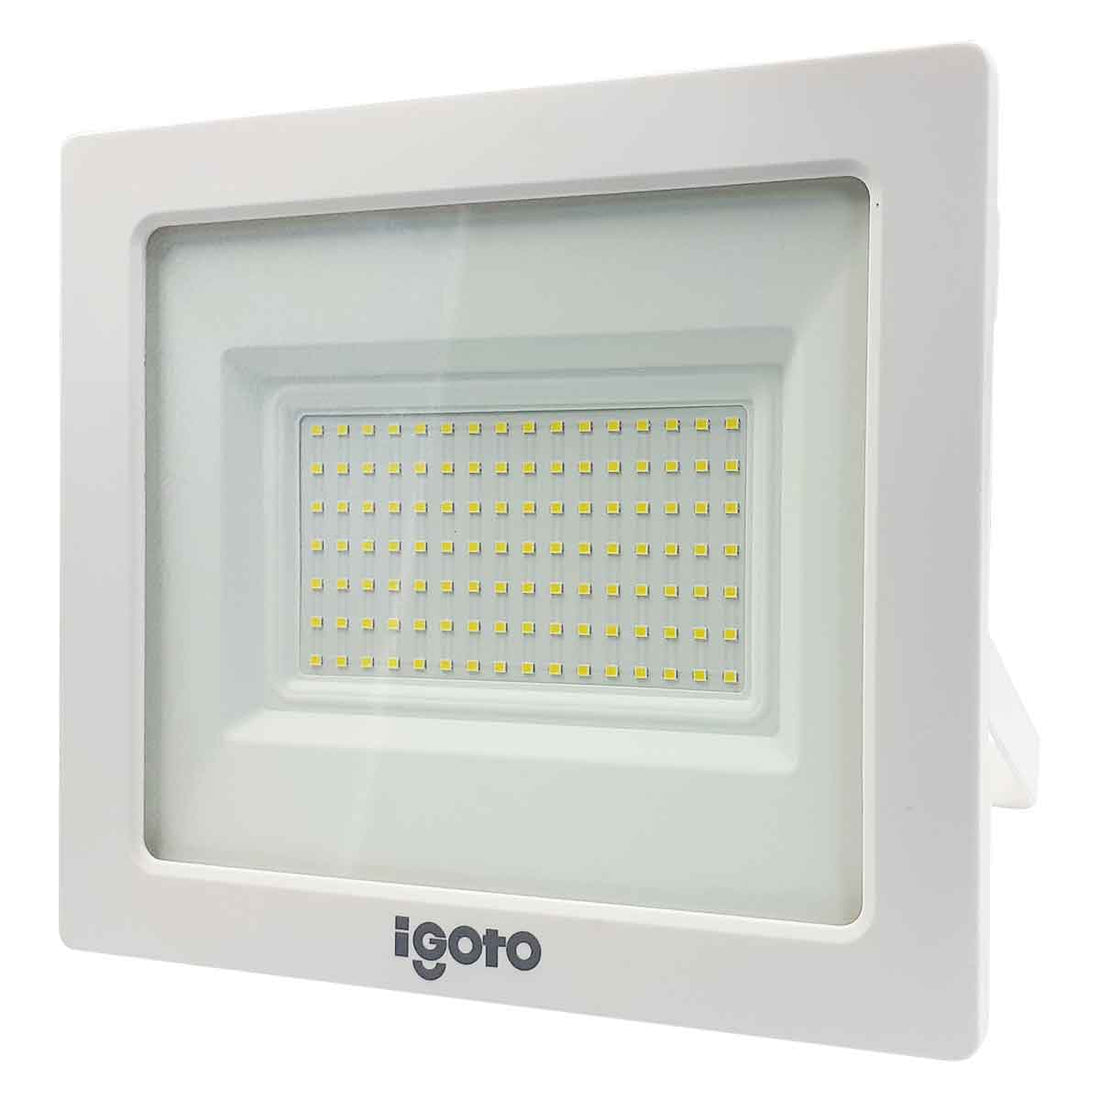 reflector led 100w blanco igoto vista frontal